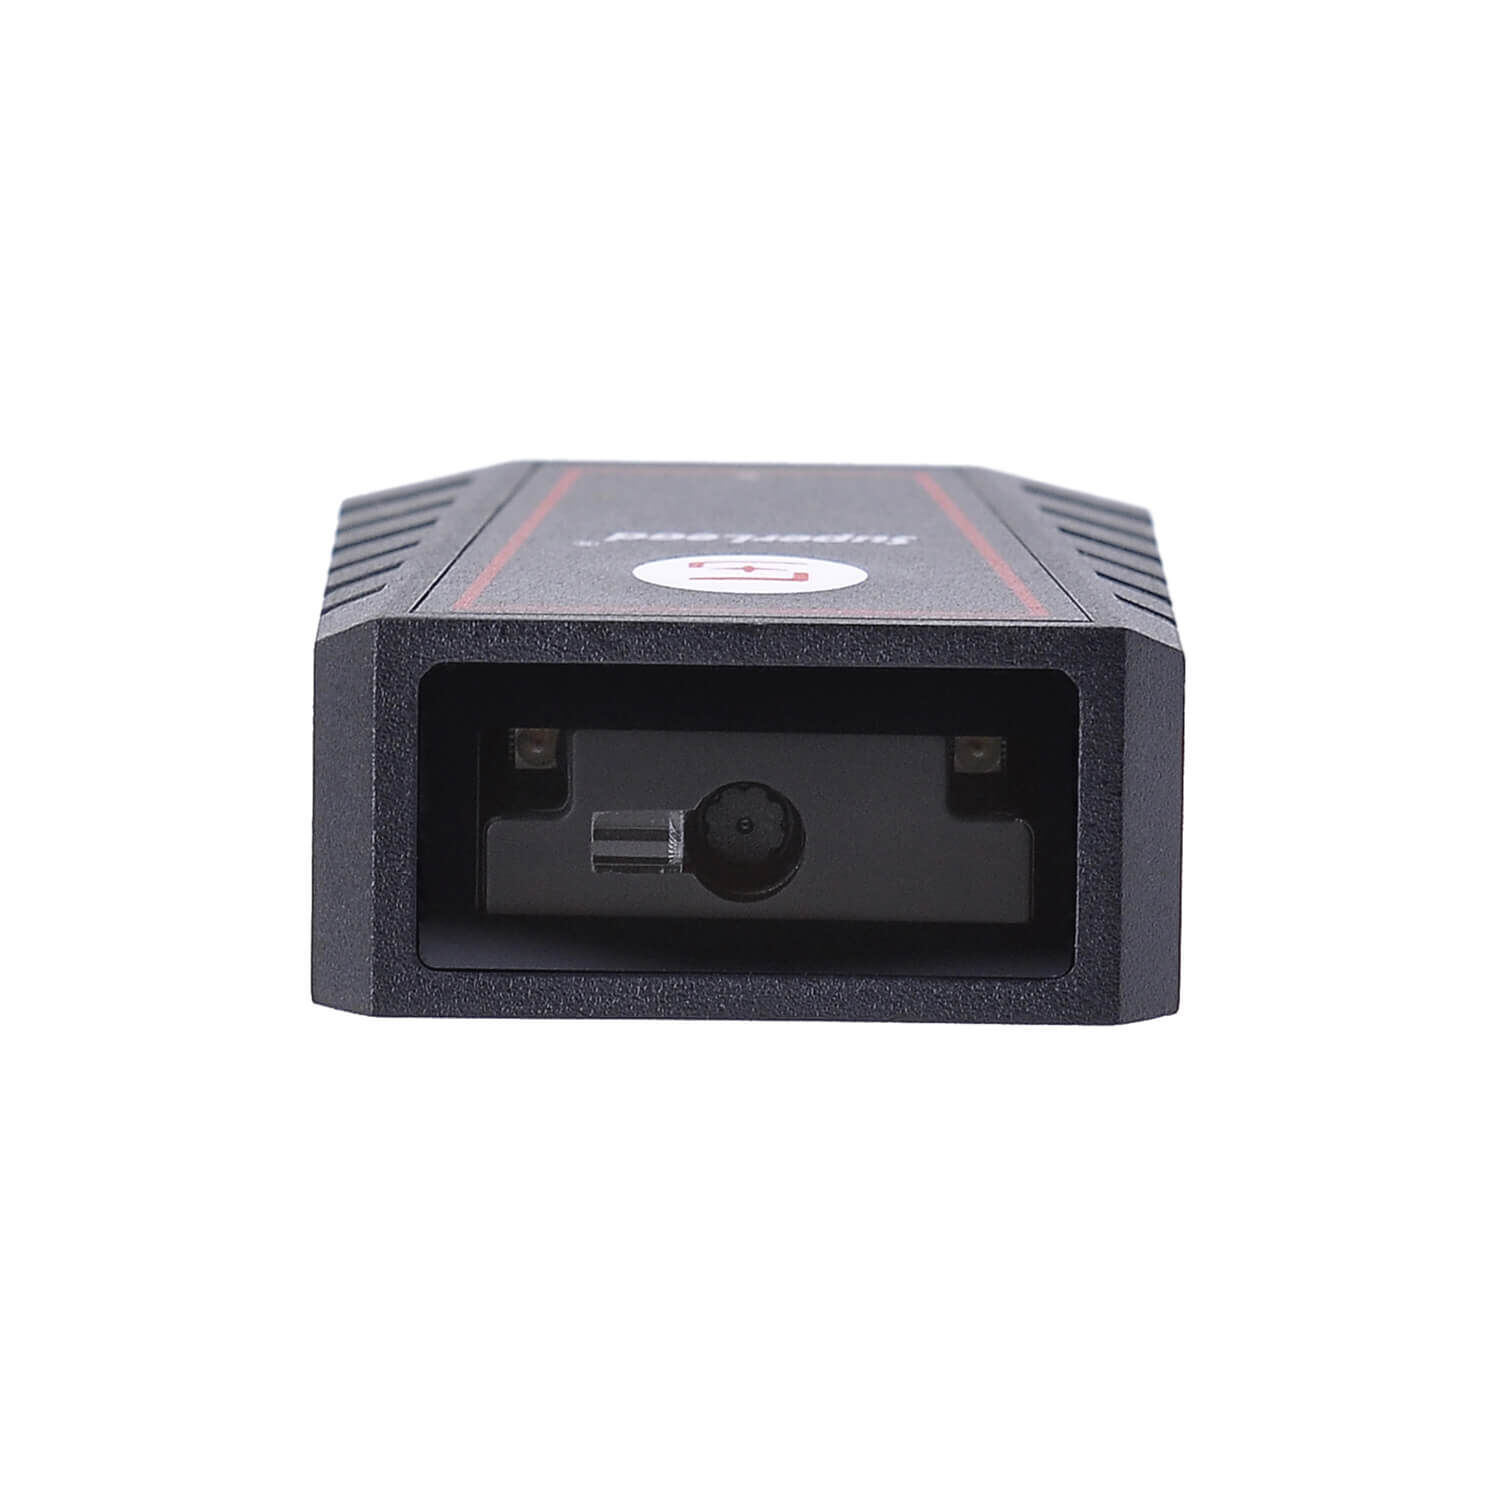 Сканер штрих-кода MERTECH N300 warm light P2D USB, USB эмуляция RS232 (4861) Mertech (Mercury)